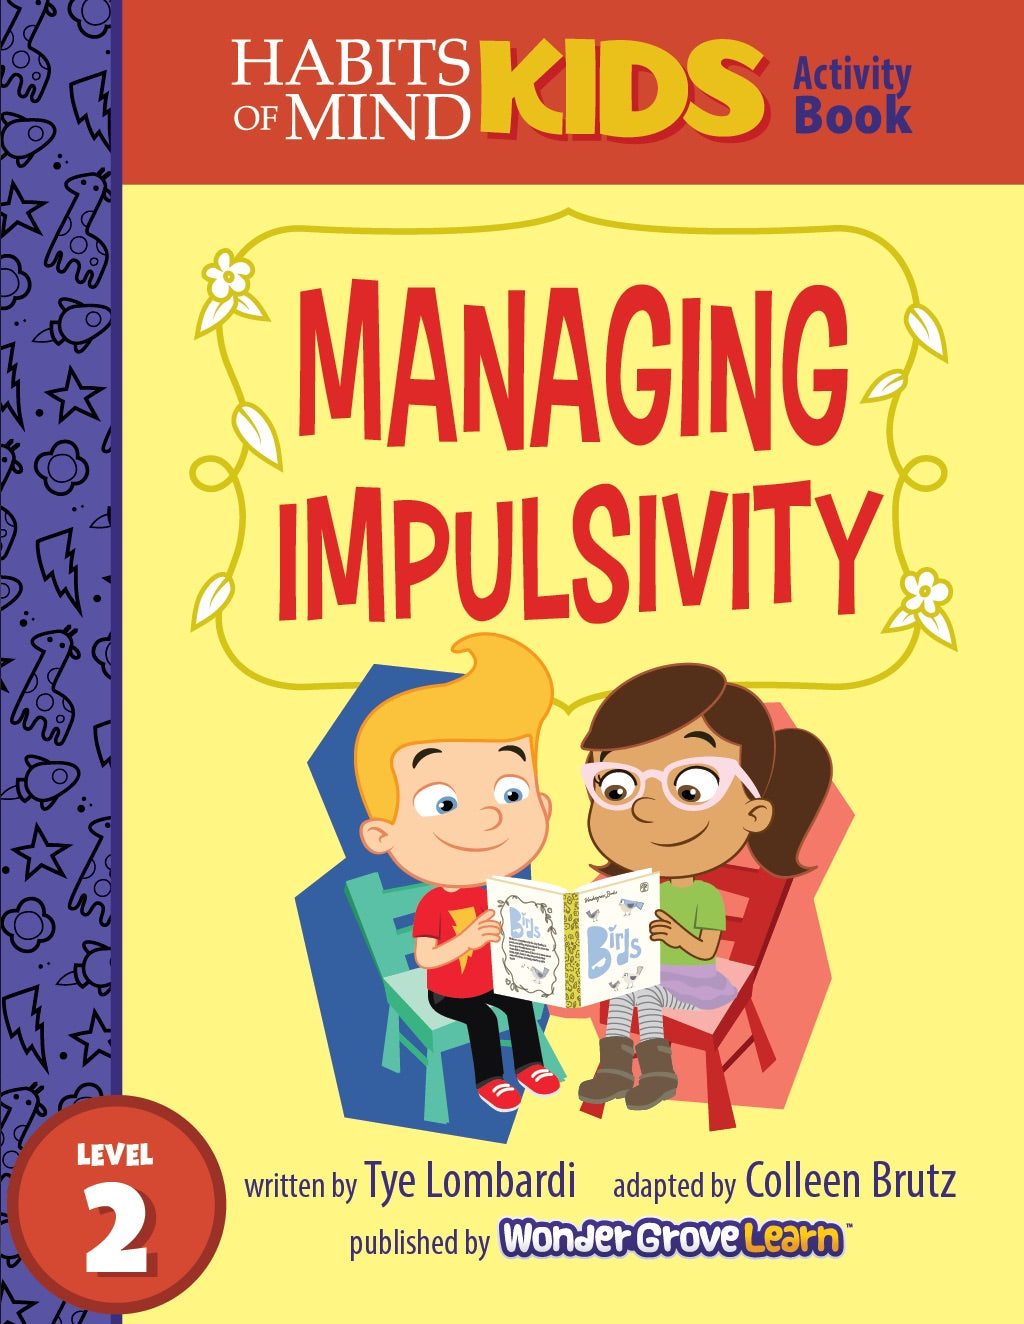 Managing Impulsivity: A Habits of Mind Story for Second Grade